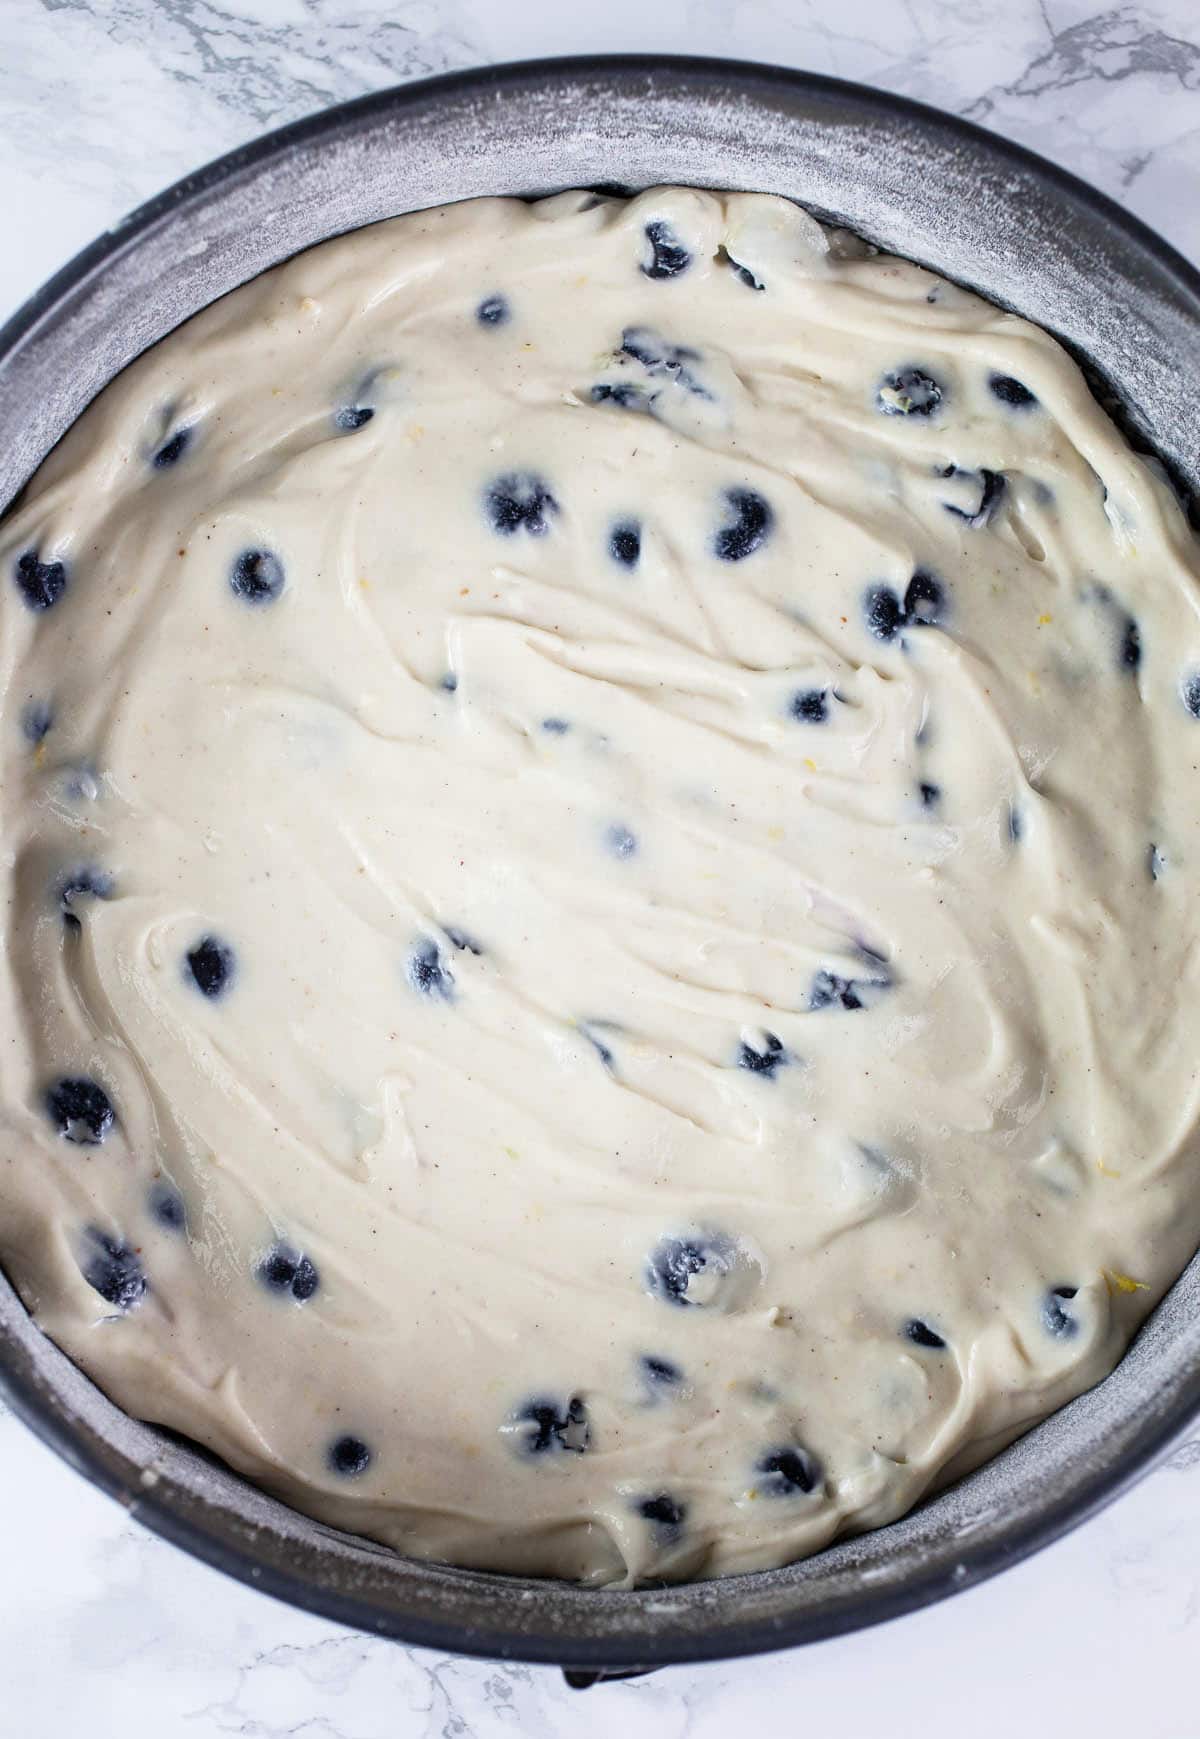 Blueberry cake batter in springform pan.